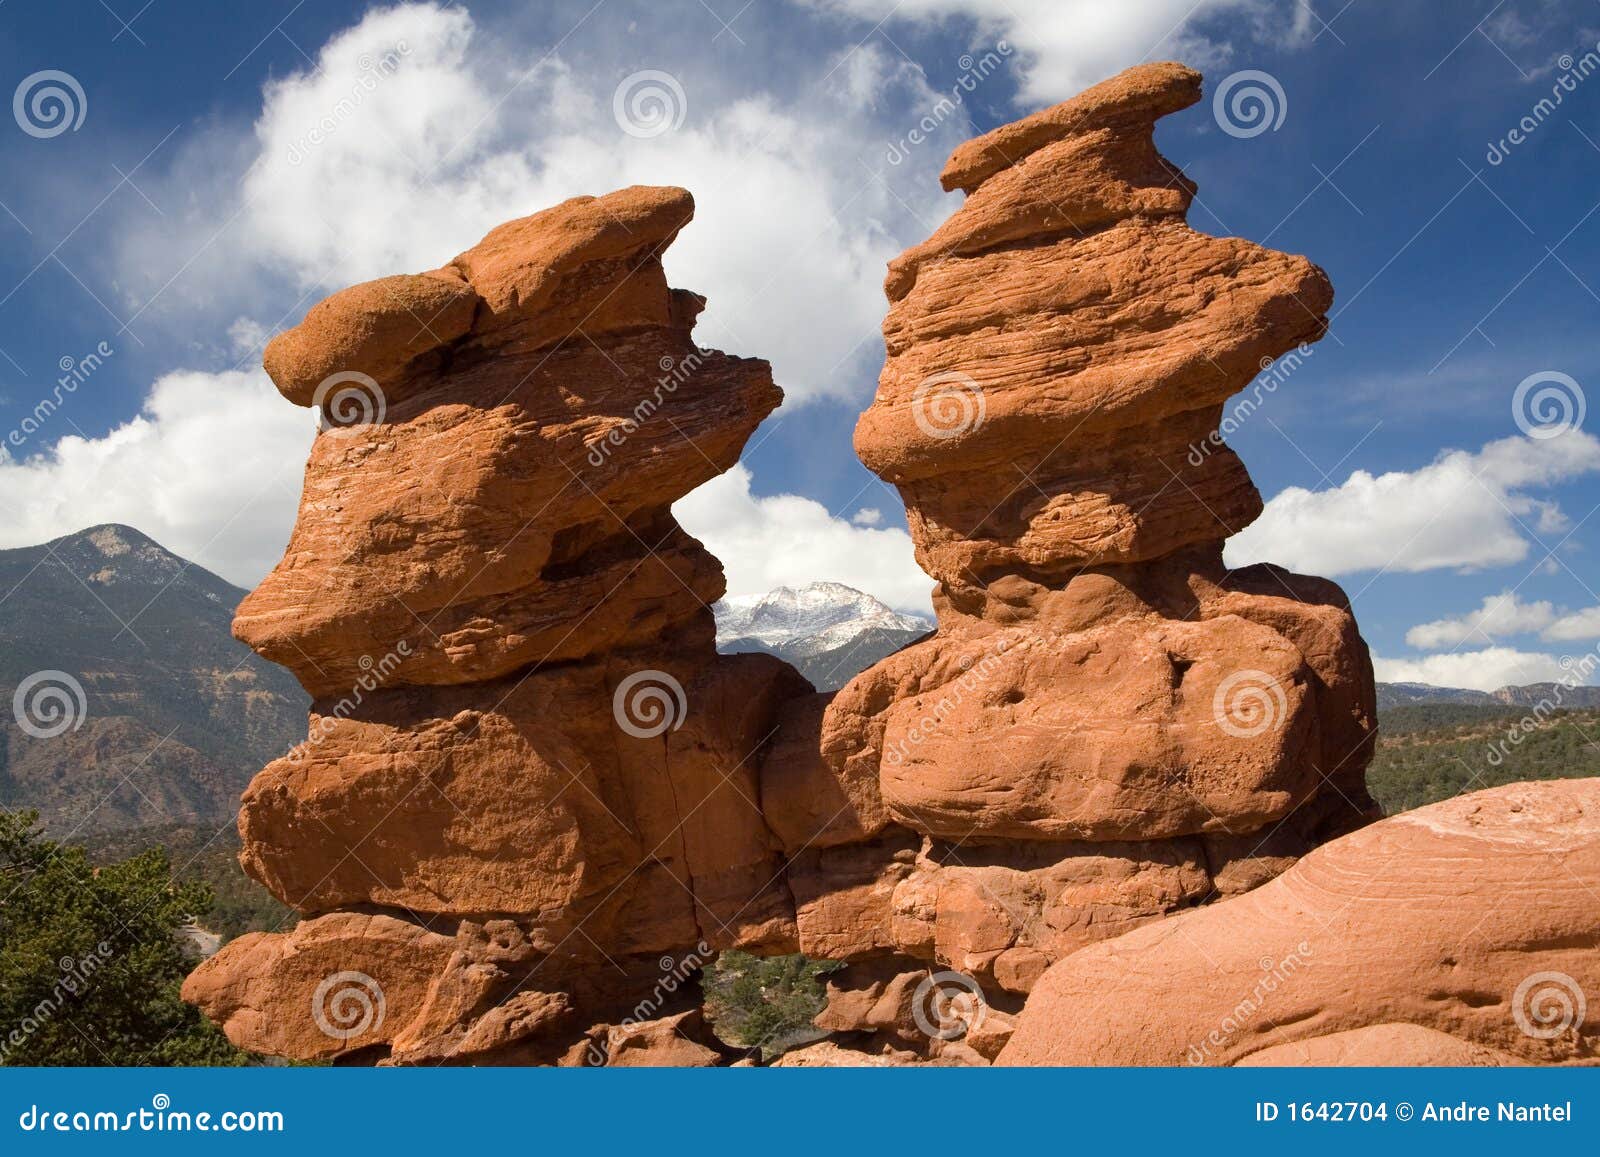 Siamese Twins Rock Formation Stock Photo Image Of Peak Mountains